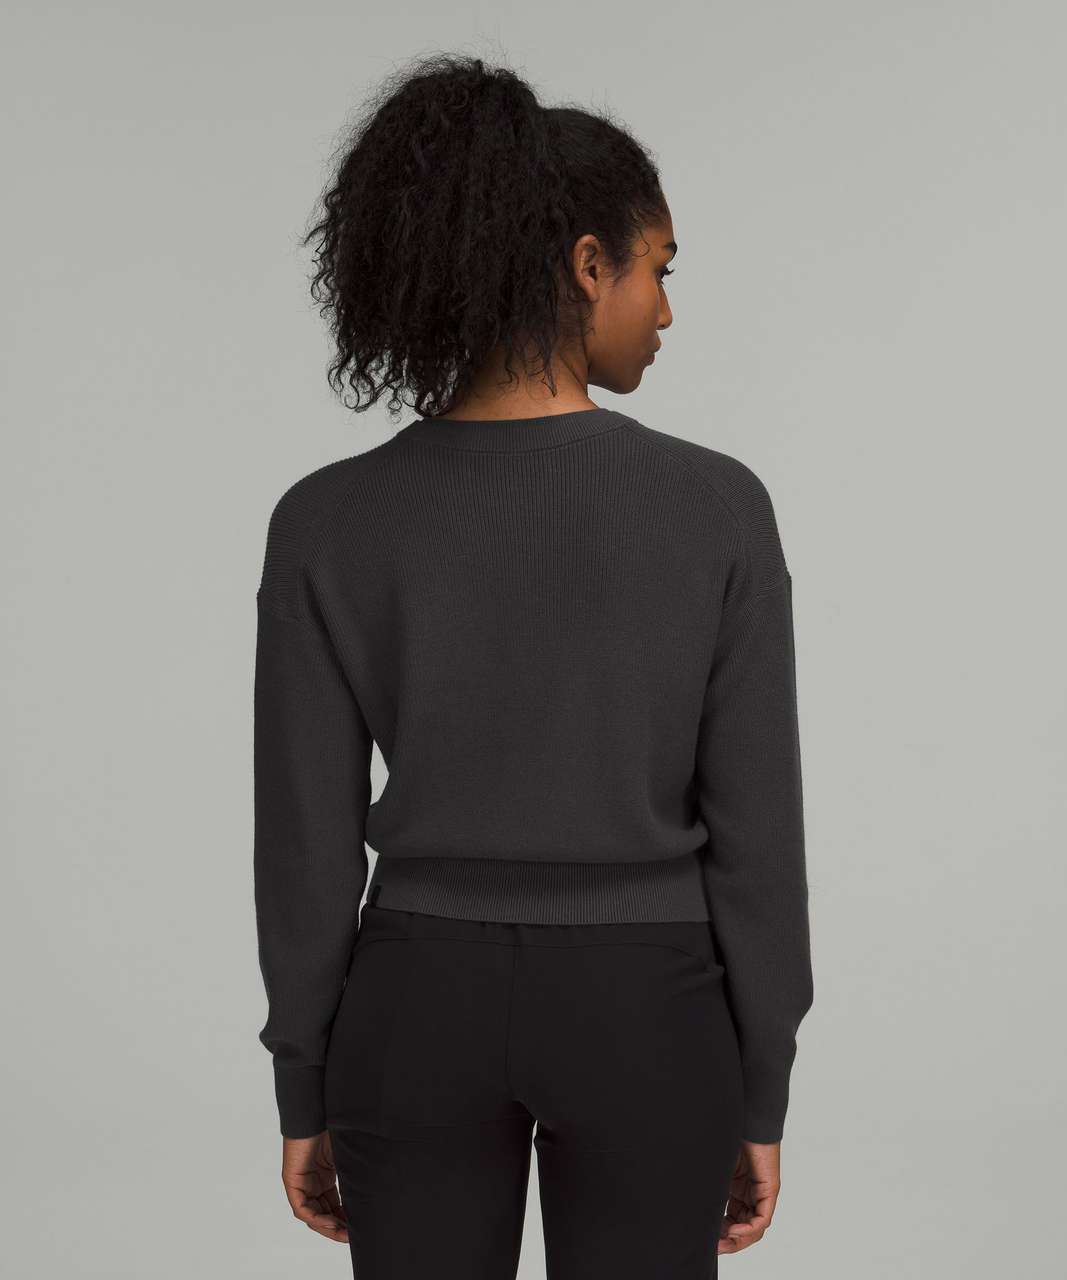 Lululemon Waist Length Crewneck Sweater - Graphite Grey / Graphite Grey